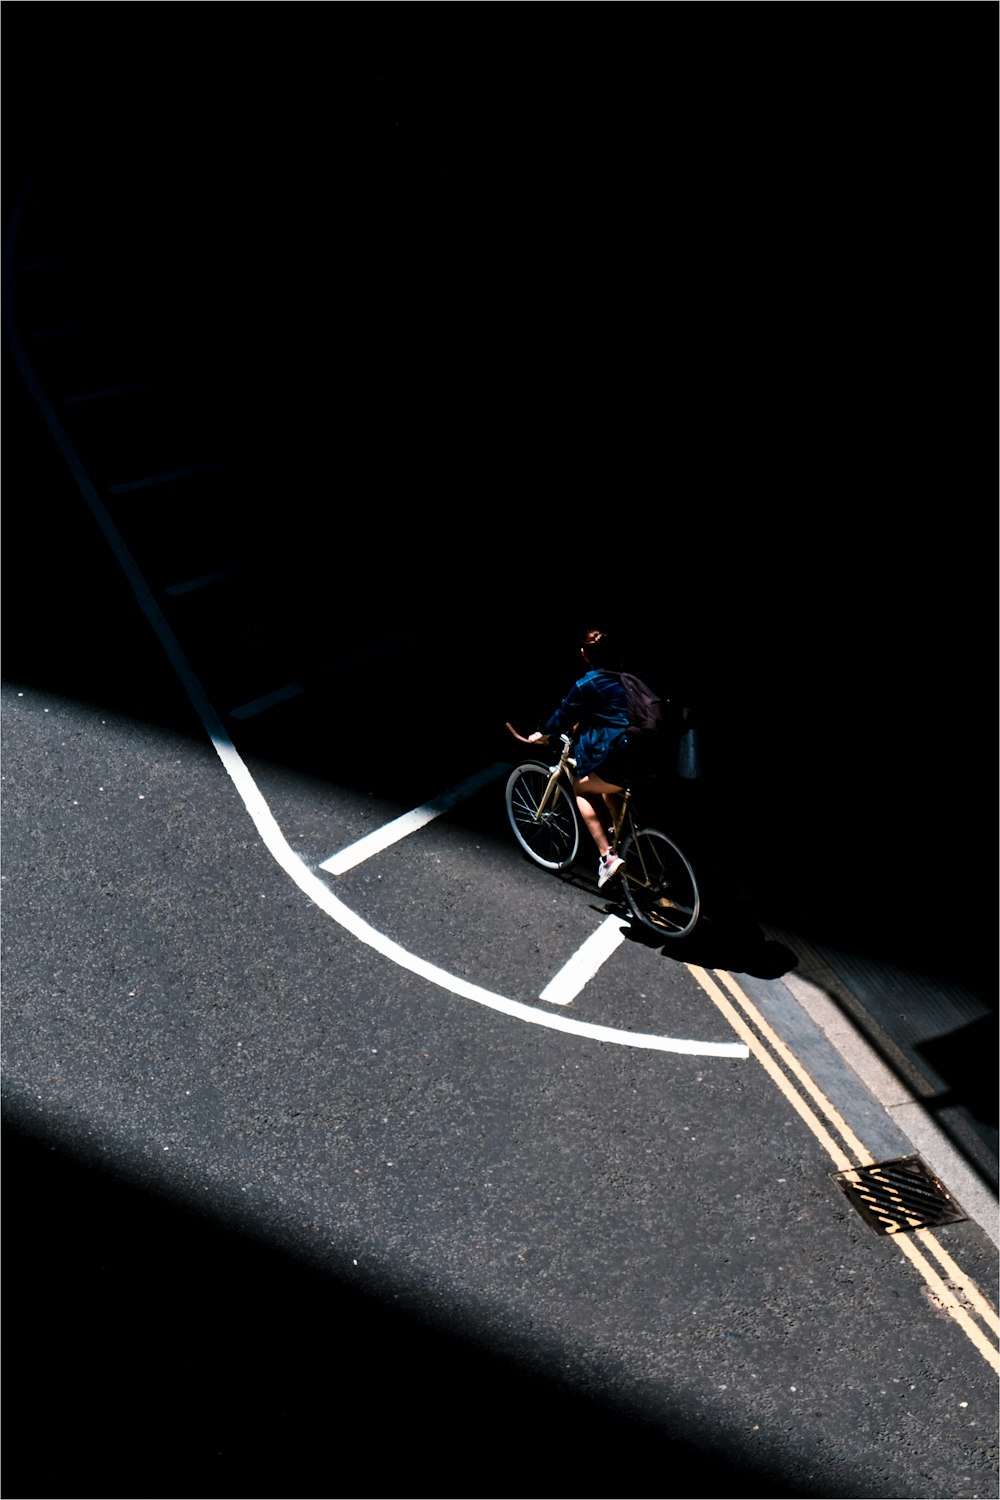 man in blue jacket riding bicycle on black asphalt road during nighttime